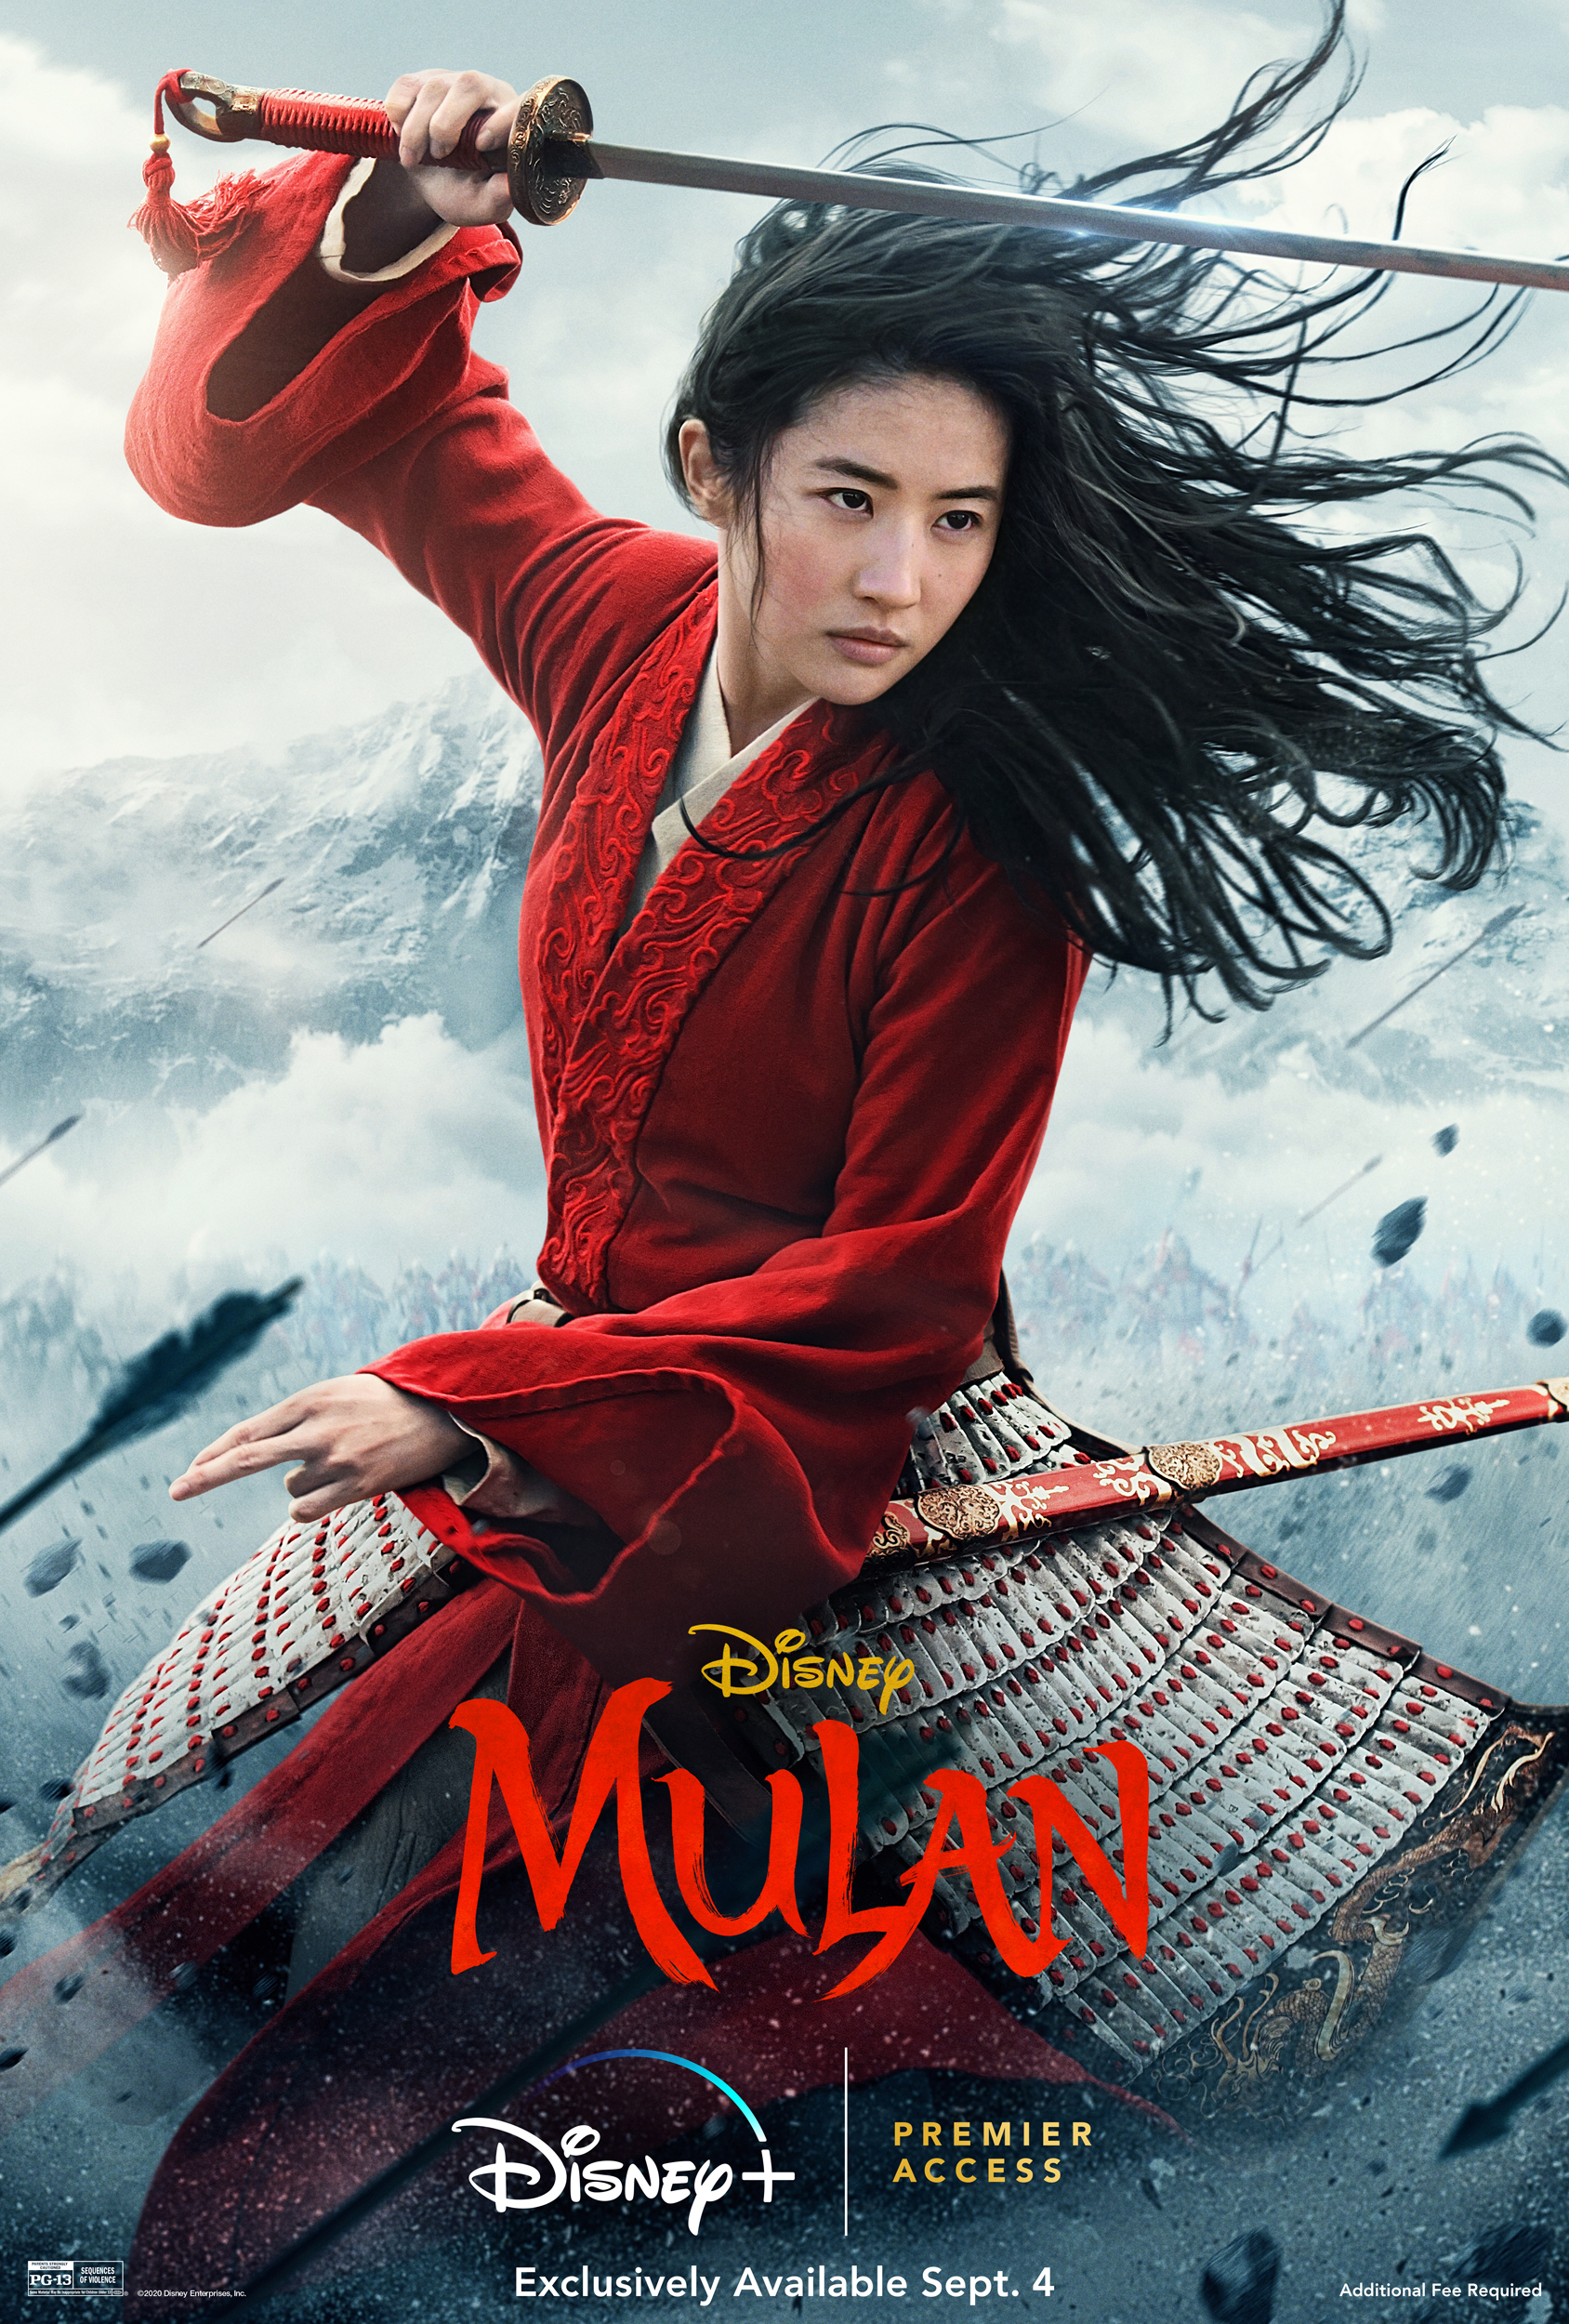 Stiahni si Filmy CZ/SK dabing Mulan (2020)(CZ)[1080p] = CSFD 56%